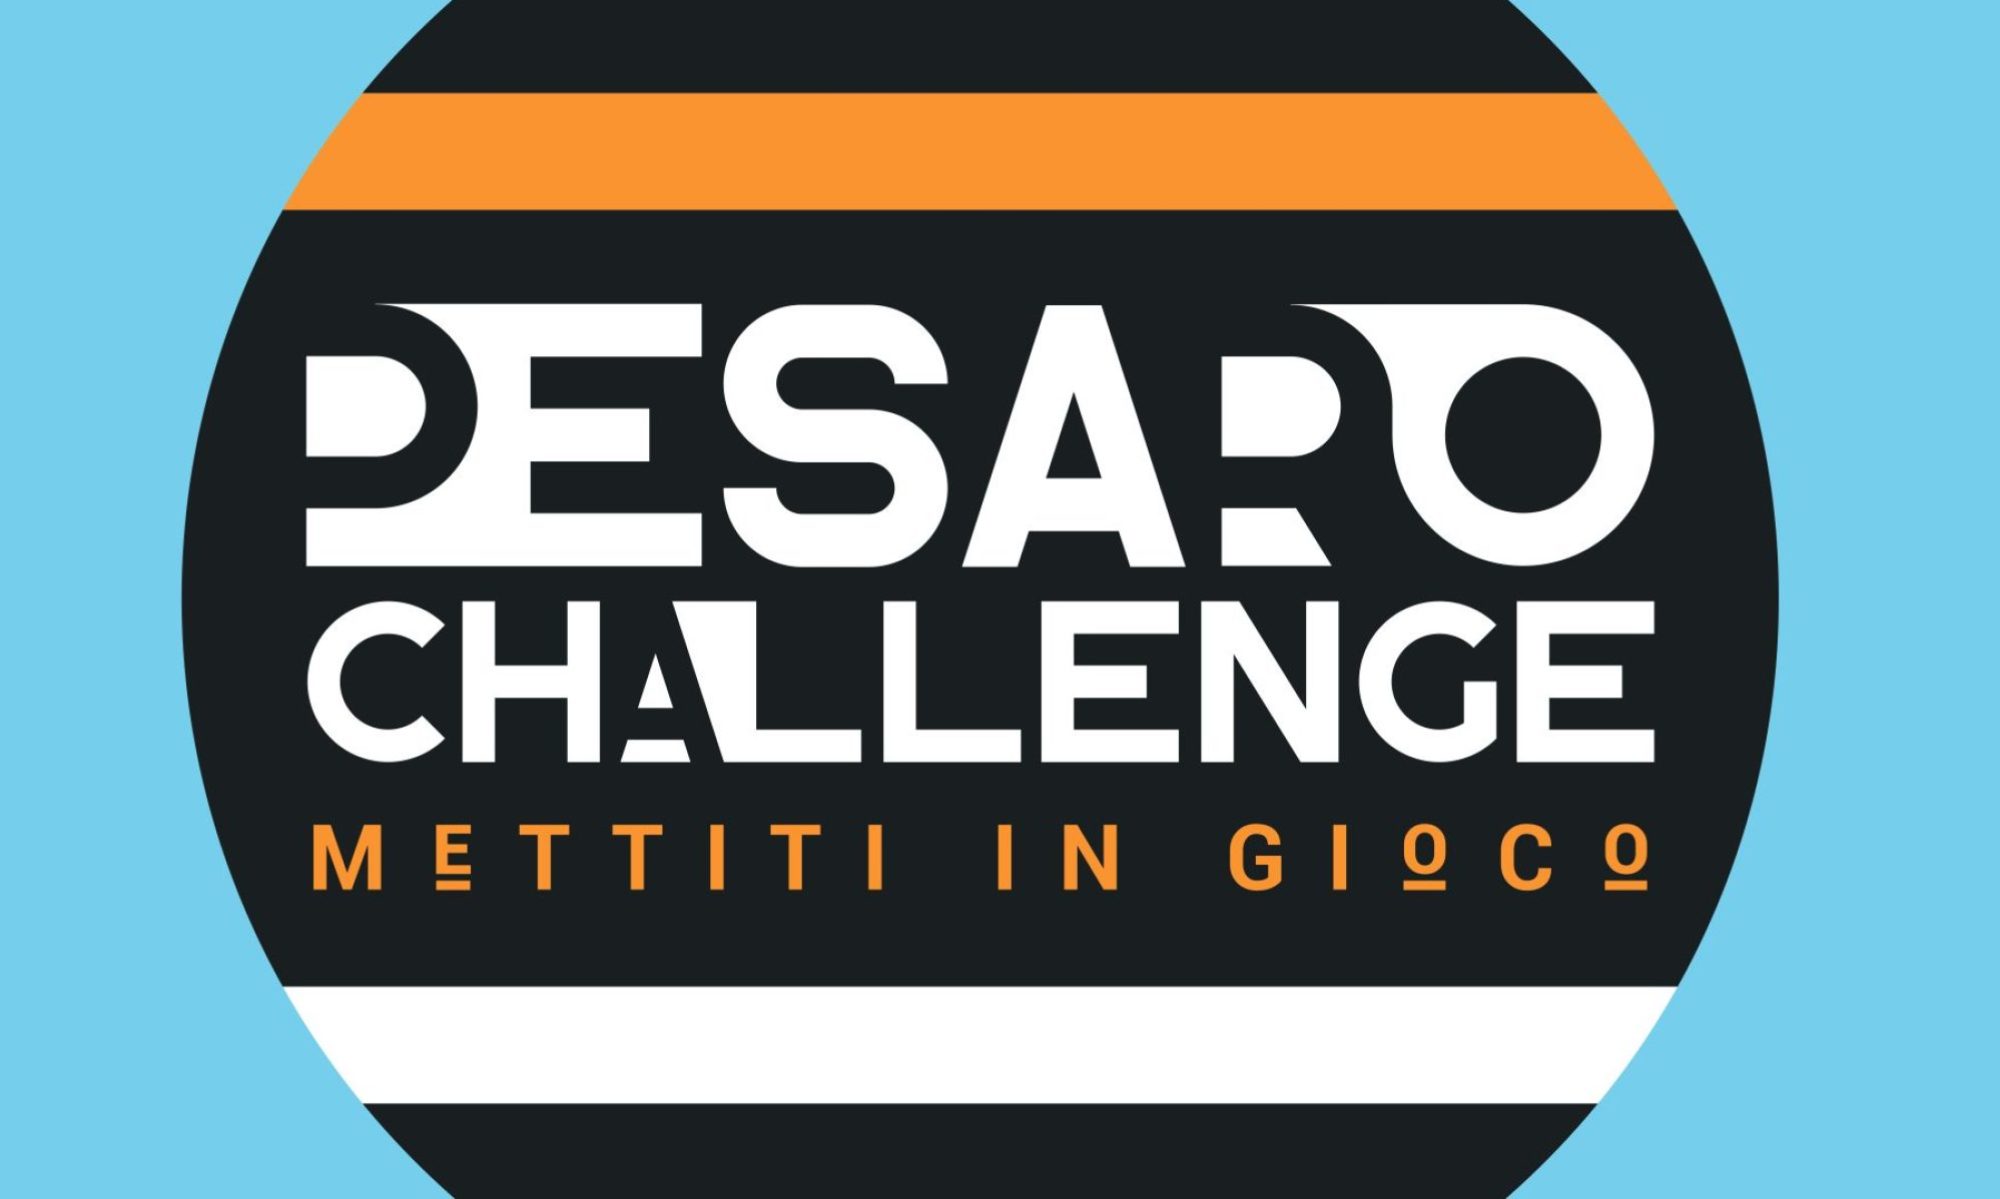 Pesaro challenge